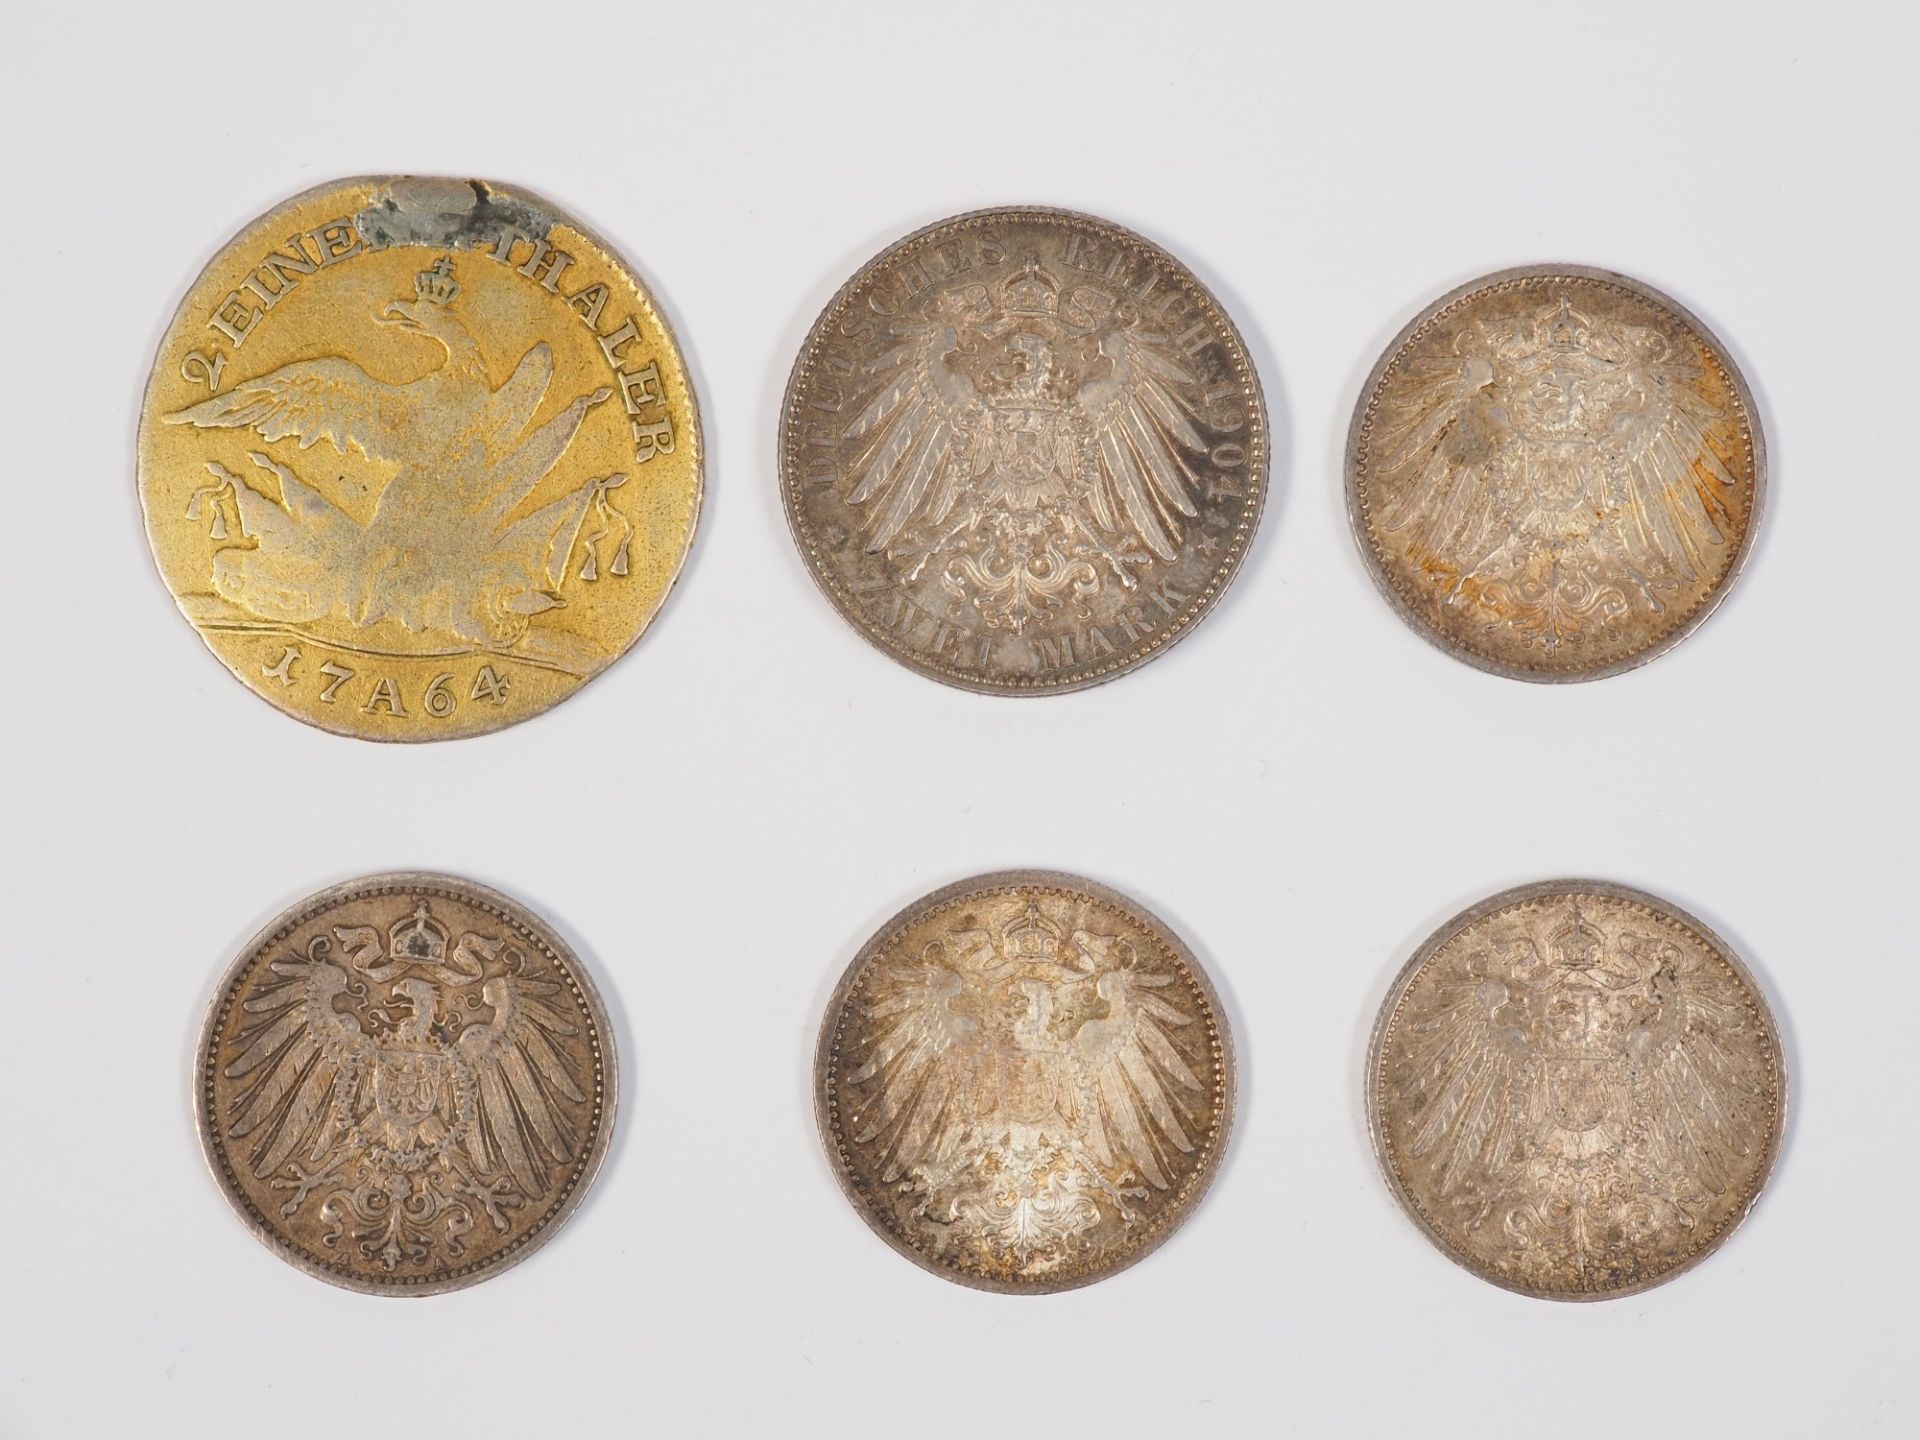 Mixed lot silver coins German Empire 1903-1915, 5 pcs. i.a. Saxony - Image 2 of 2